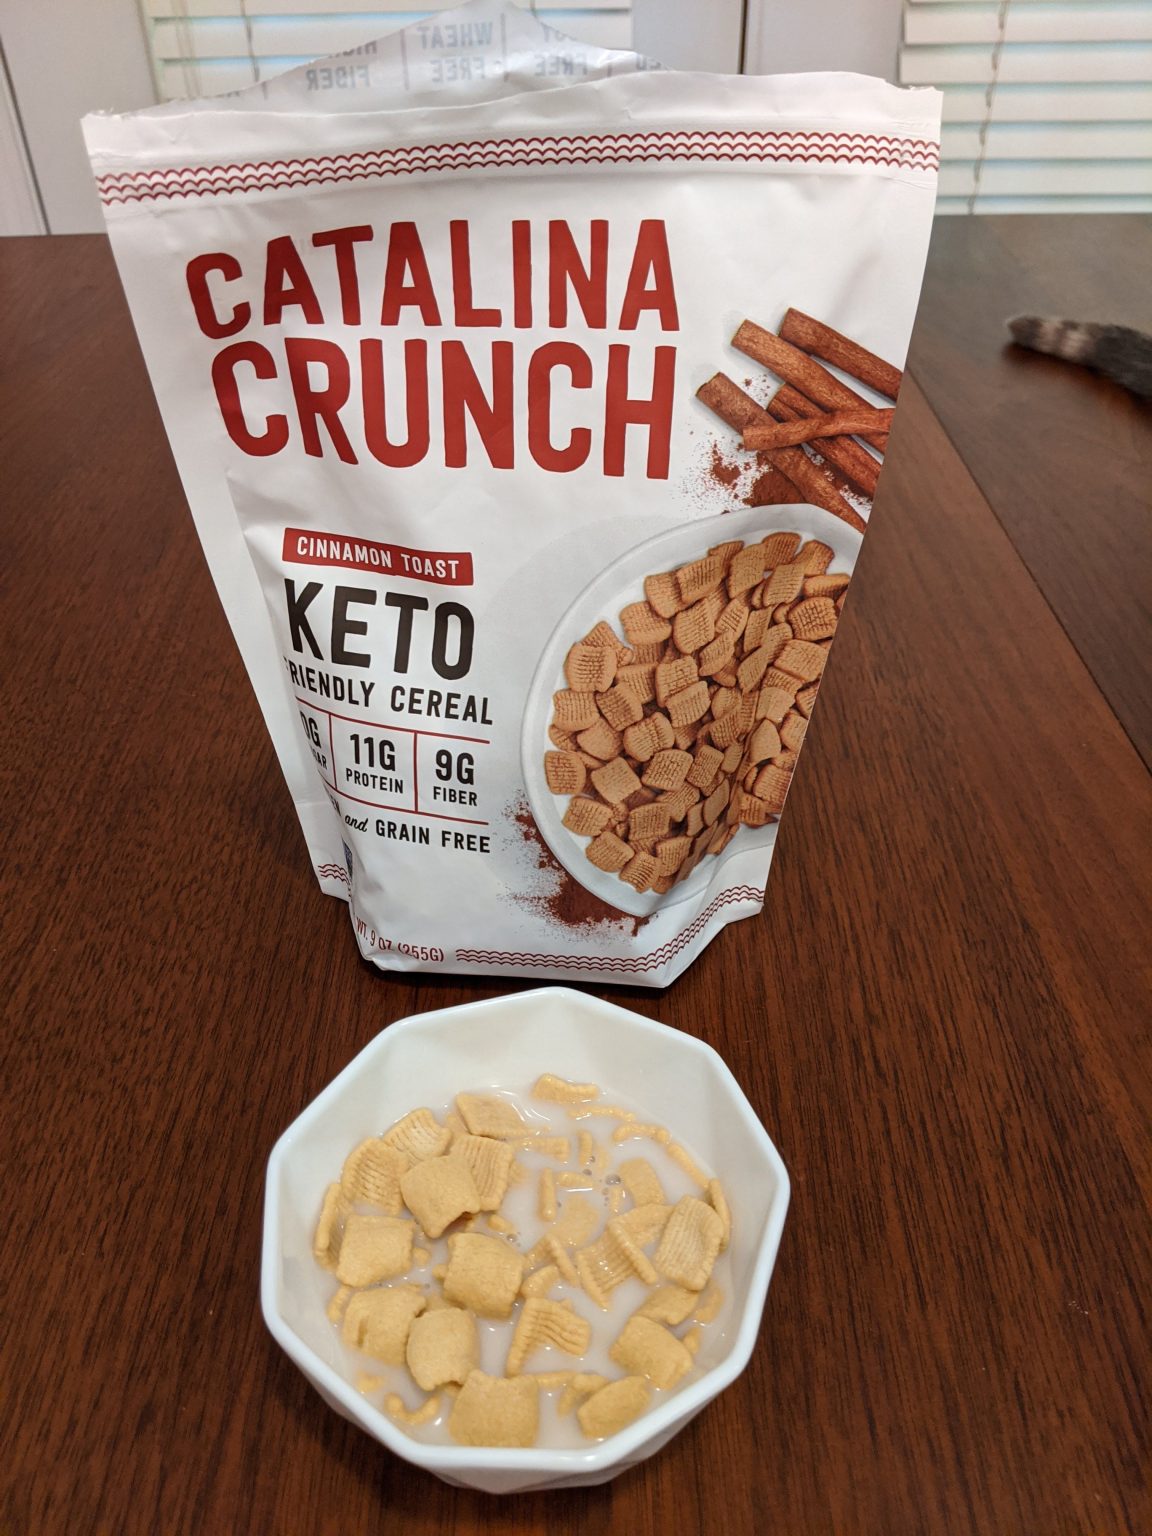 keto catalina crunch cereal